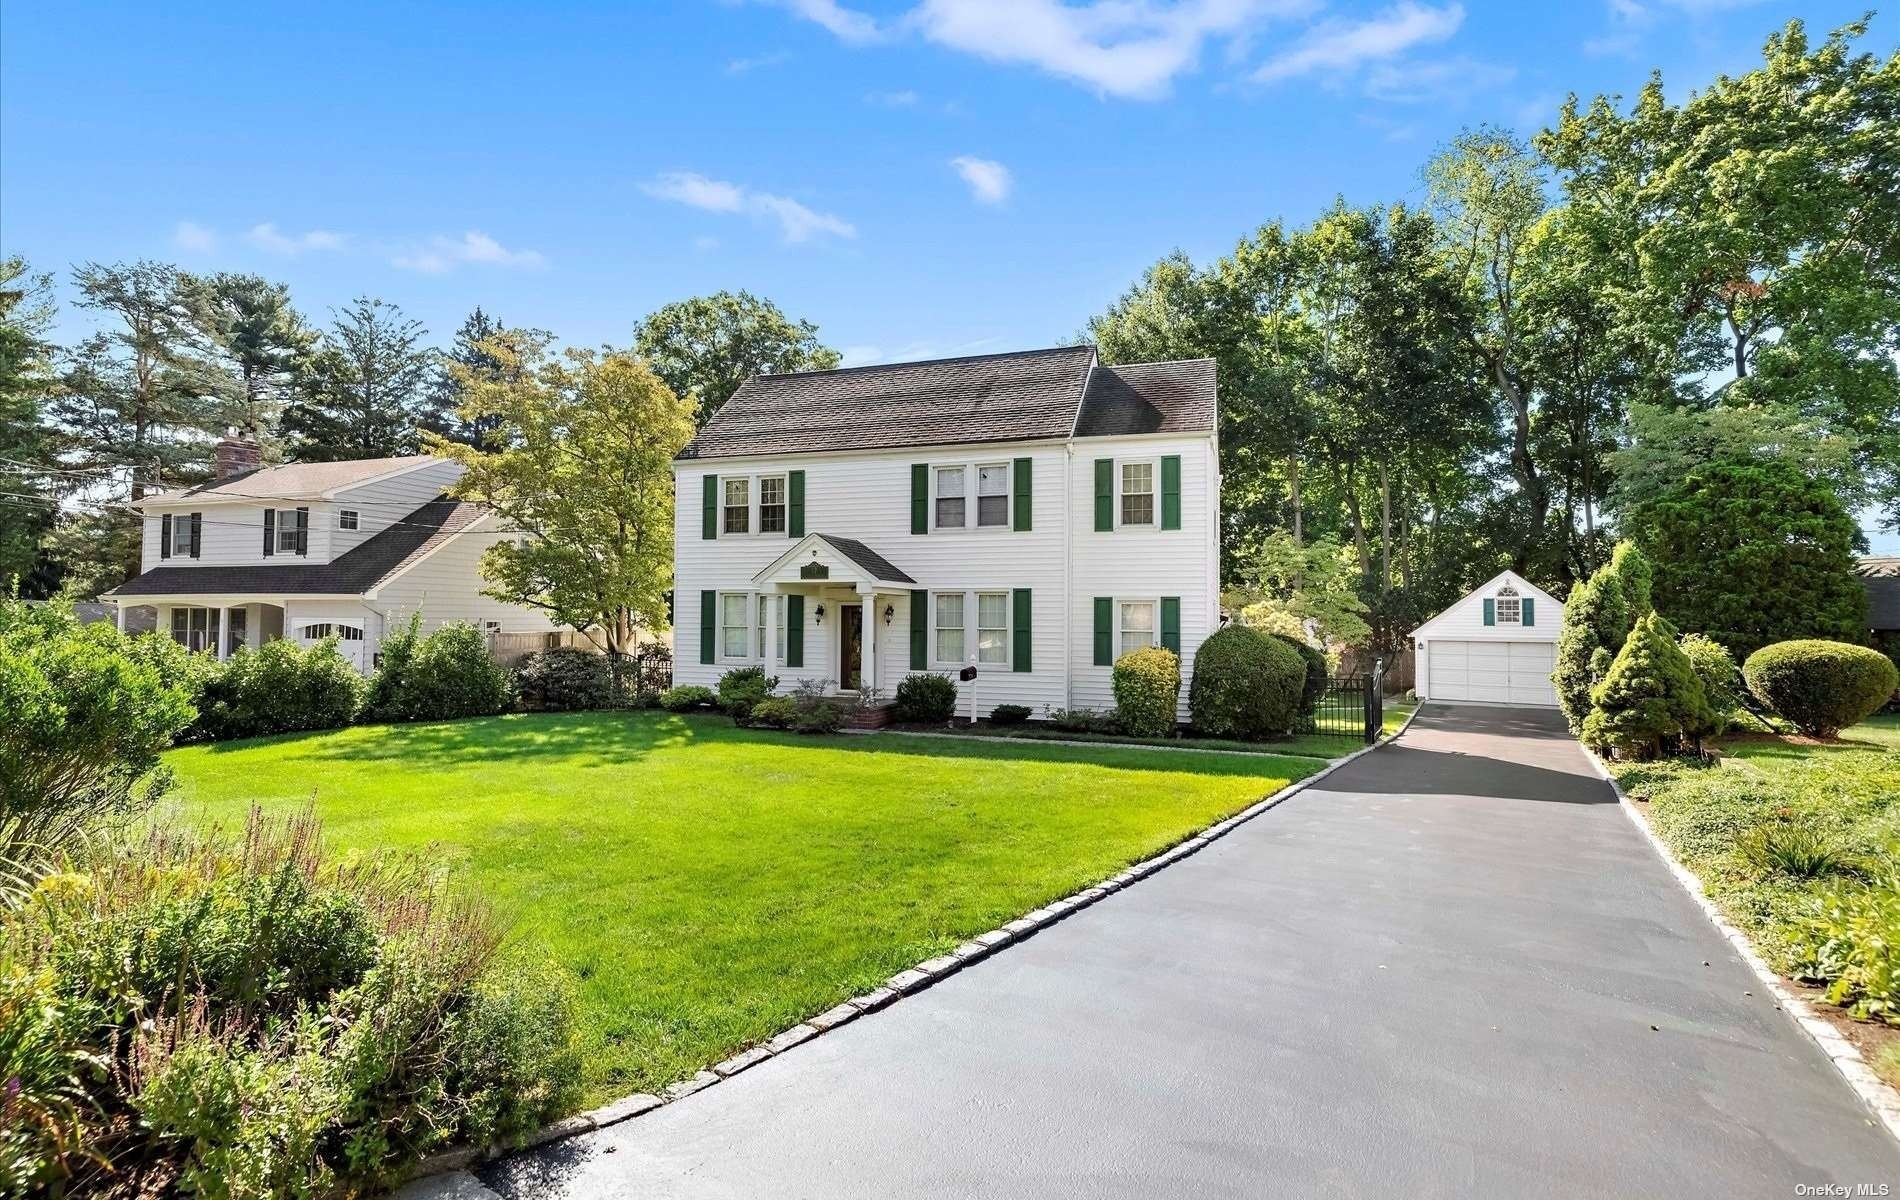 Single Family Home for Sale at Glen Head, New York 11545